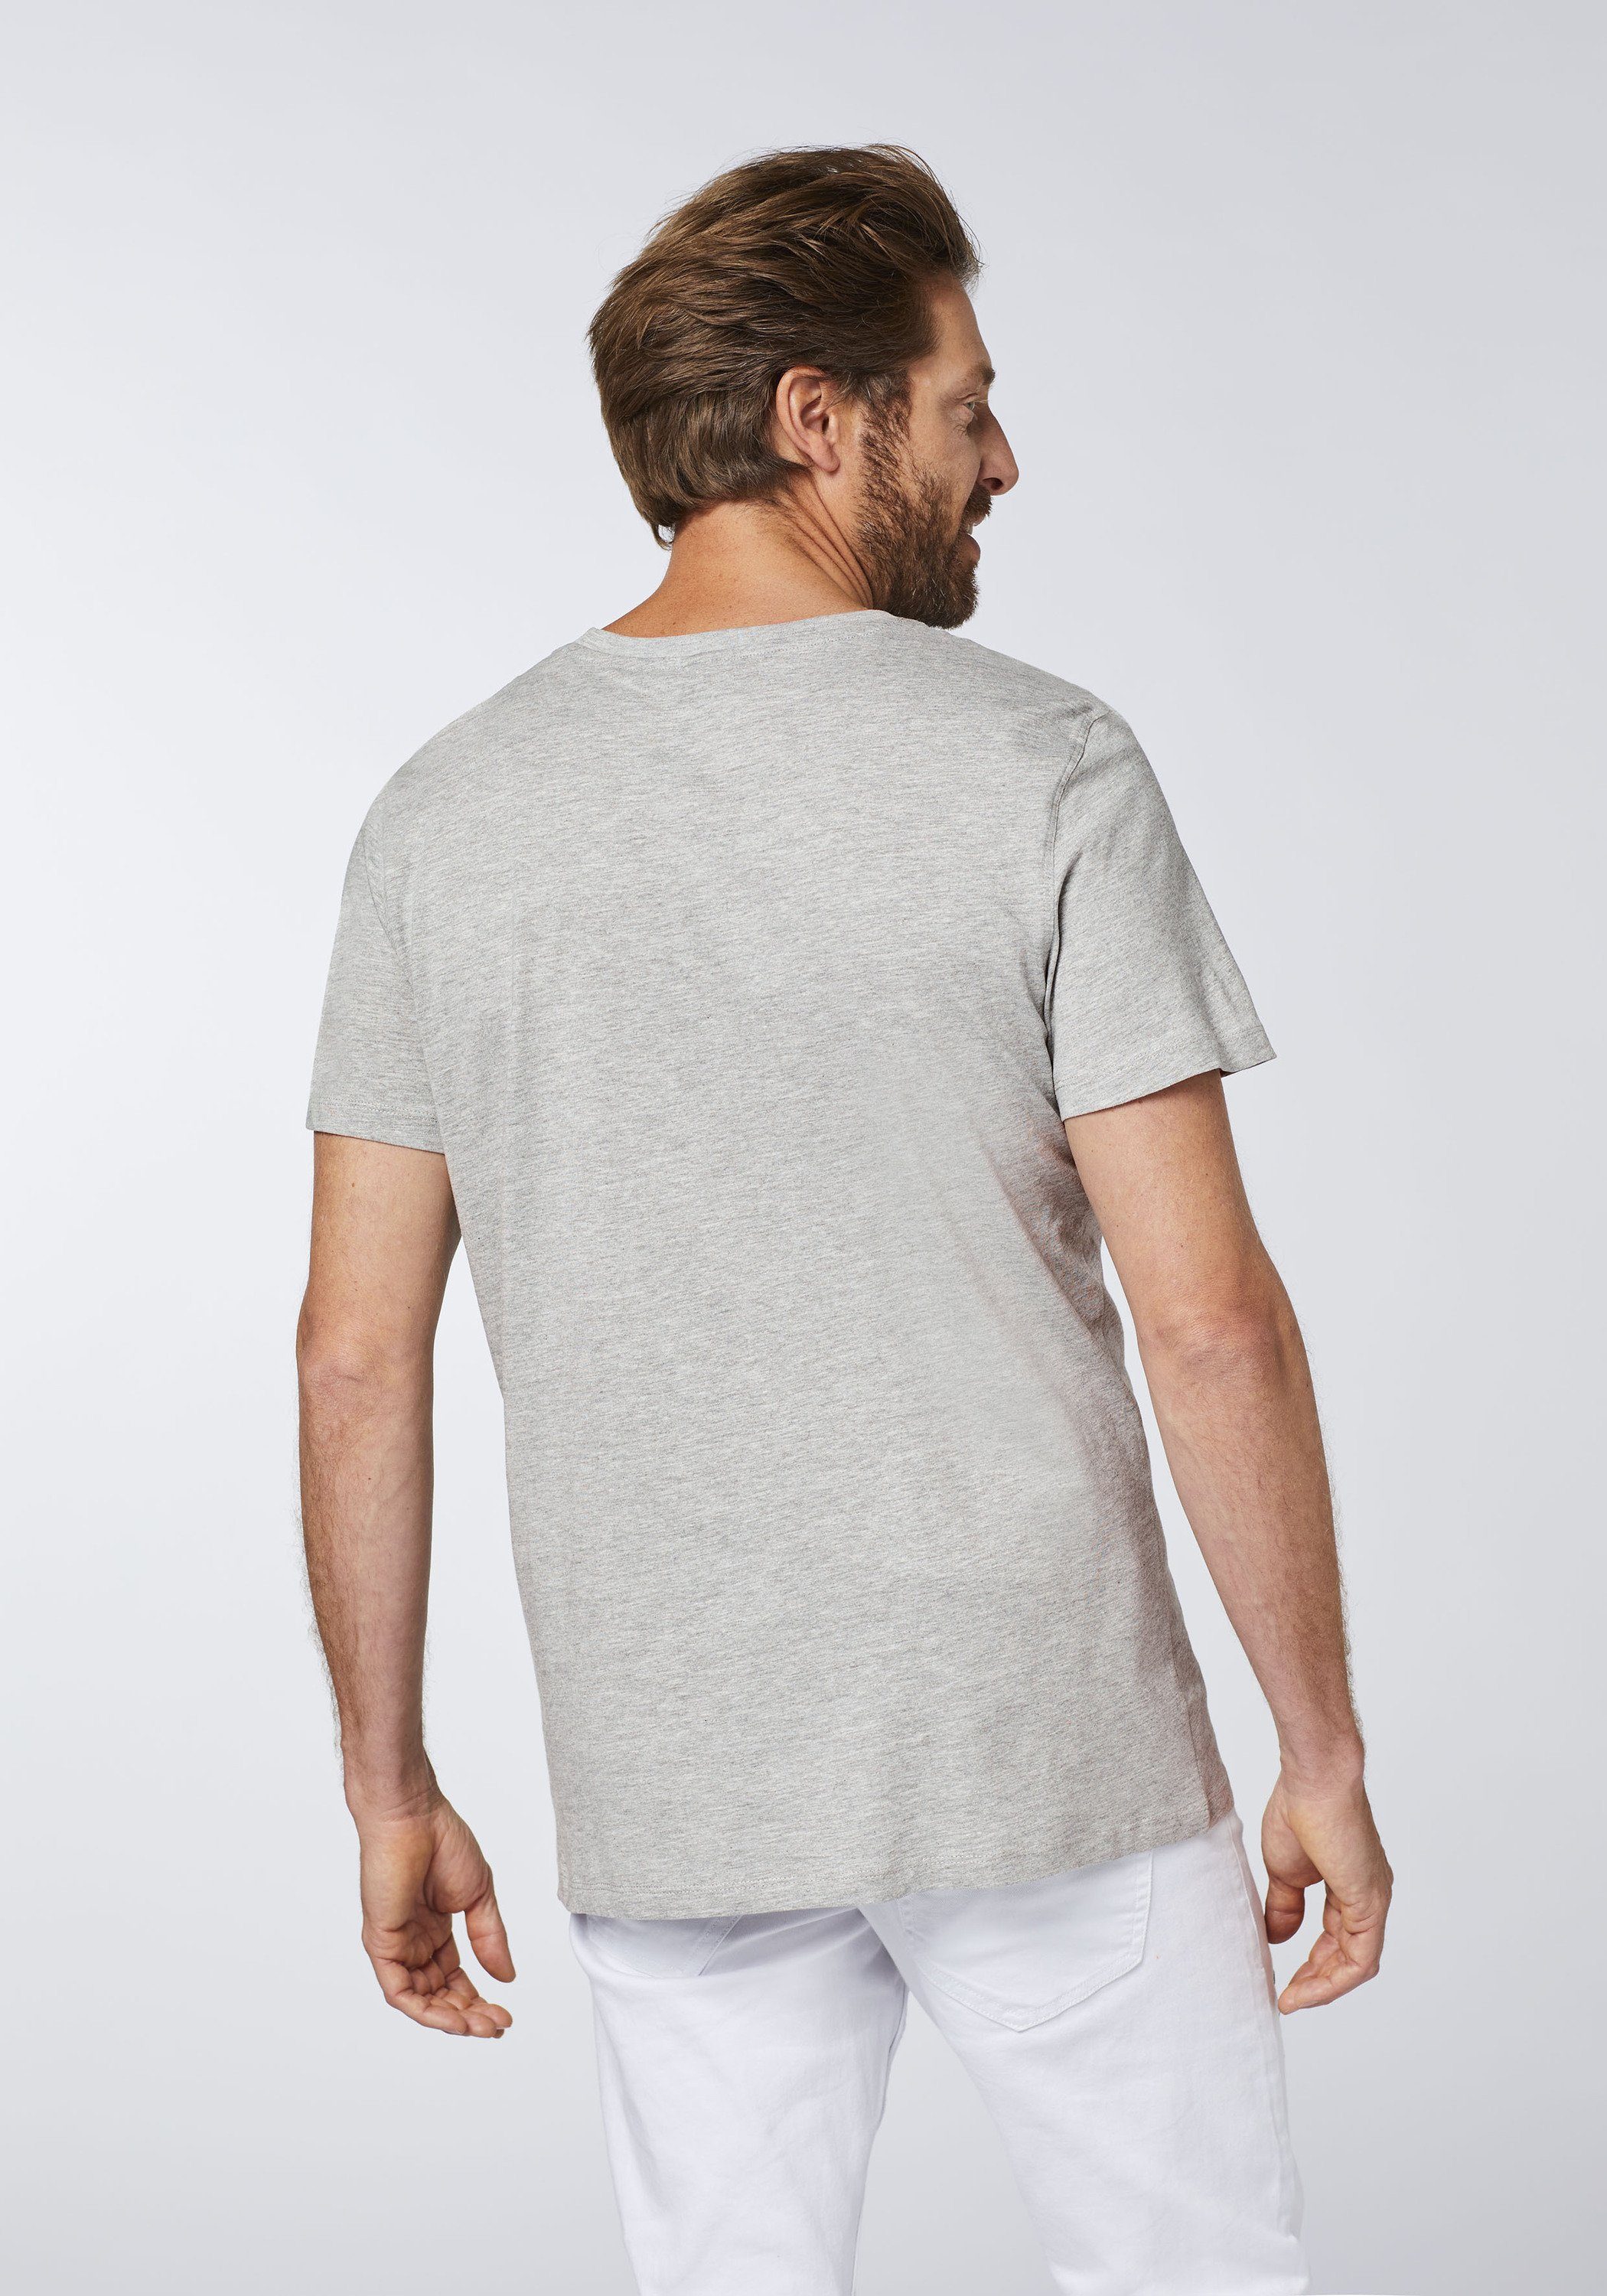 mit Neutral Gray großem Polo Sylt Print-Shirt Logoprint 17-4402M Melange